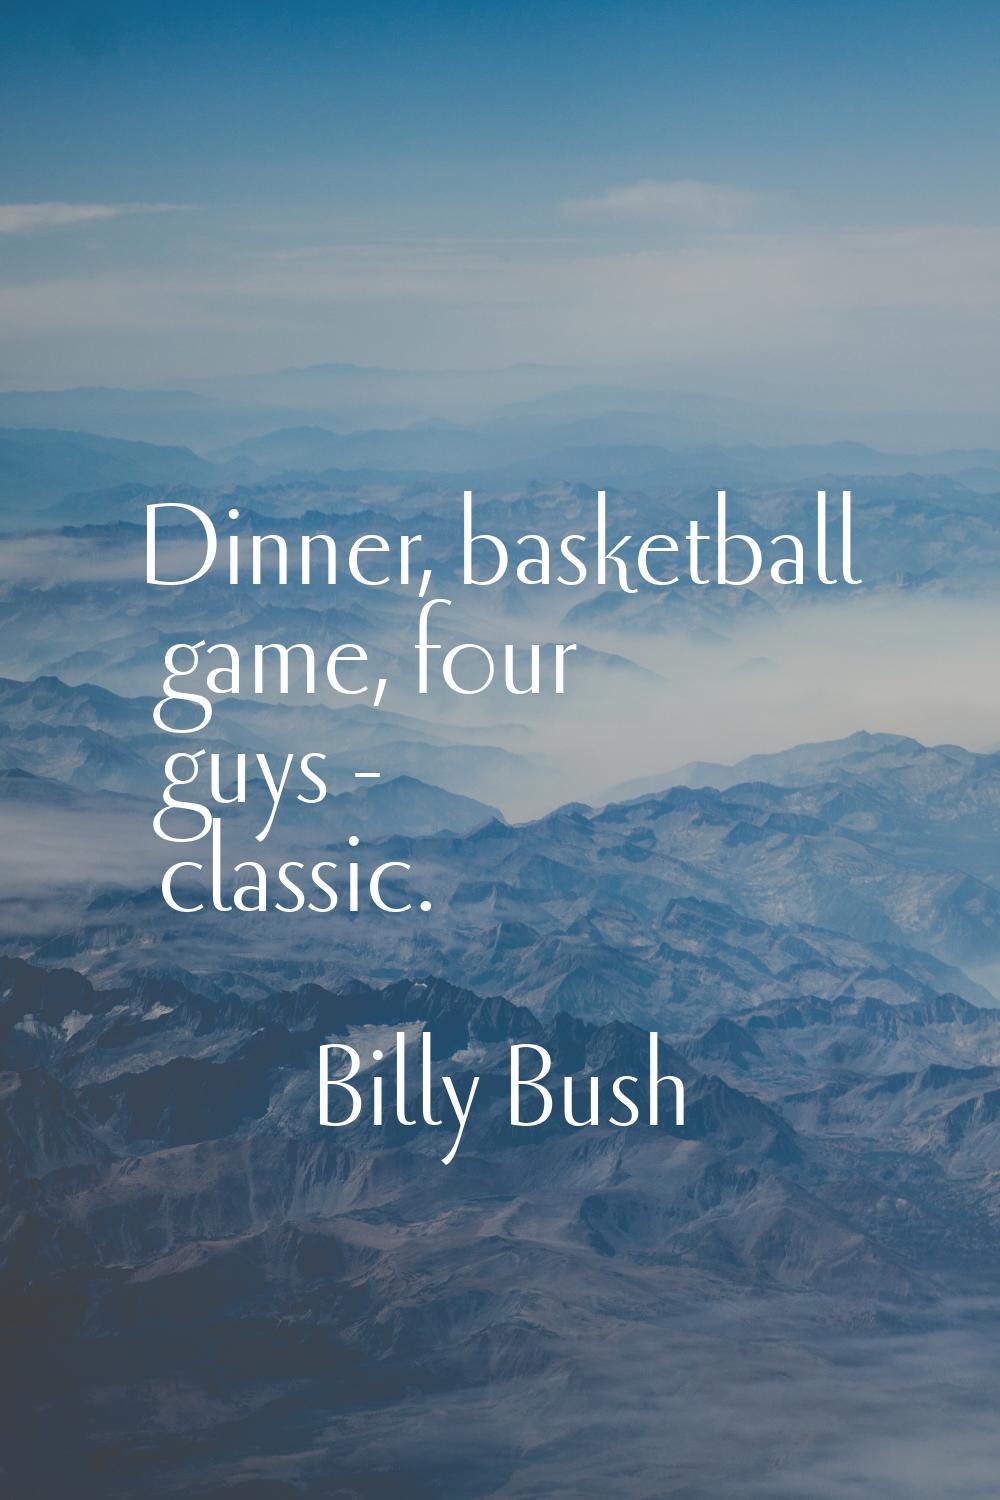 Dinner, basketball game, four guys - classic.